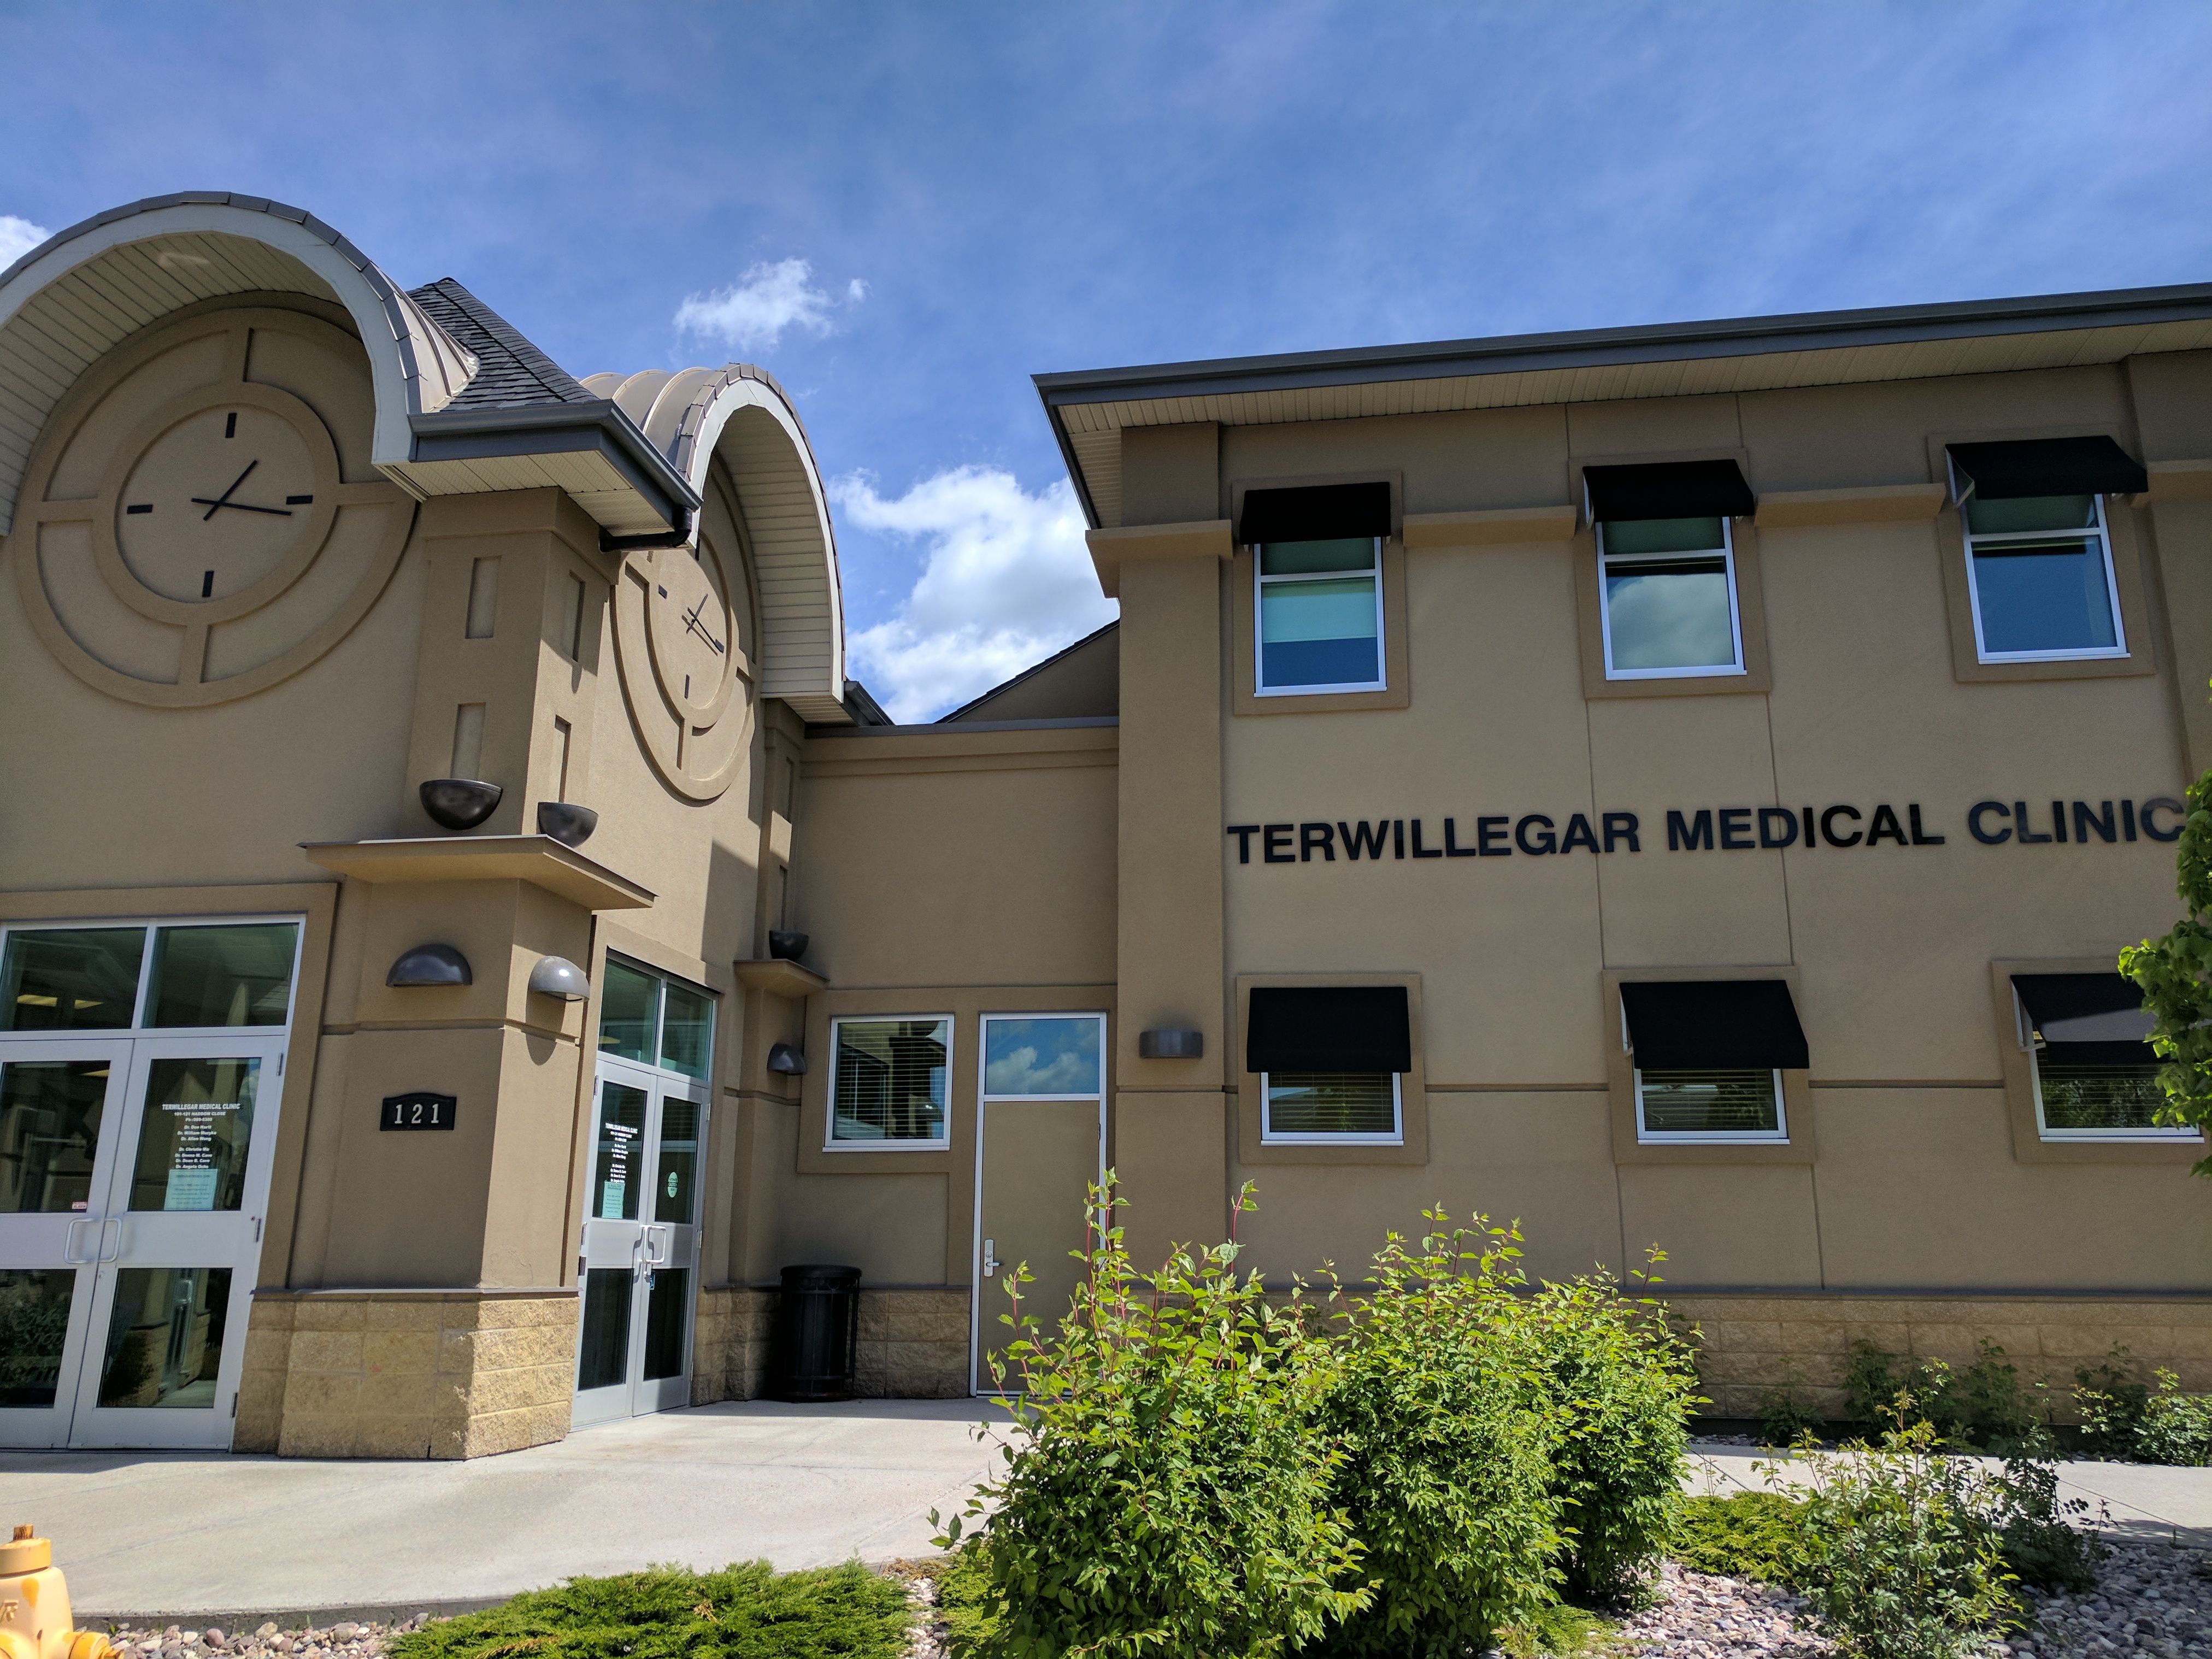 Terwillegar Medical Clinic